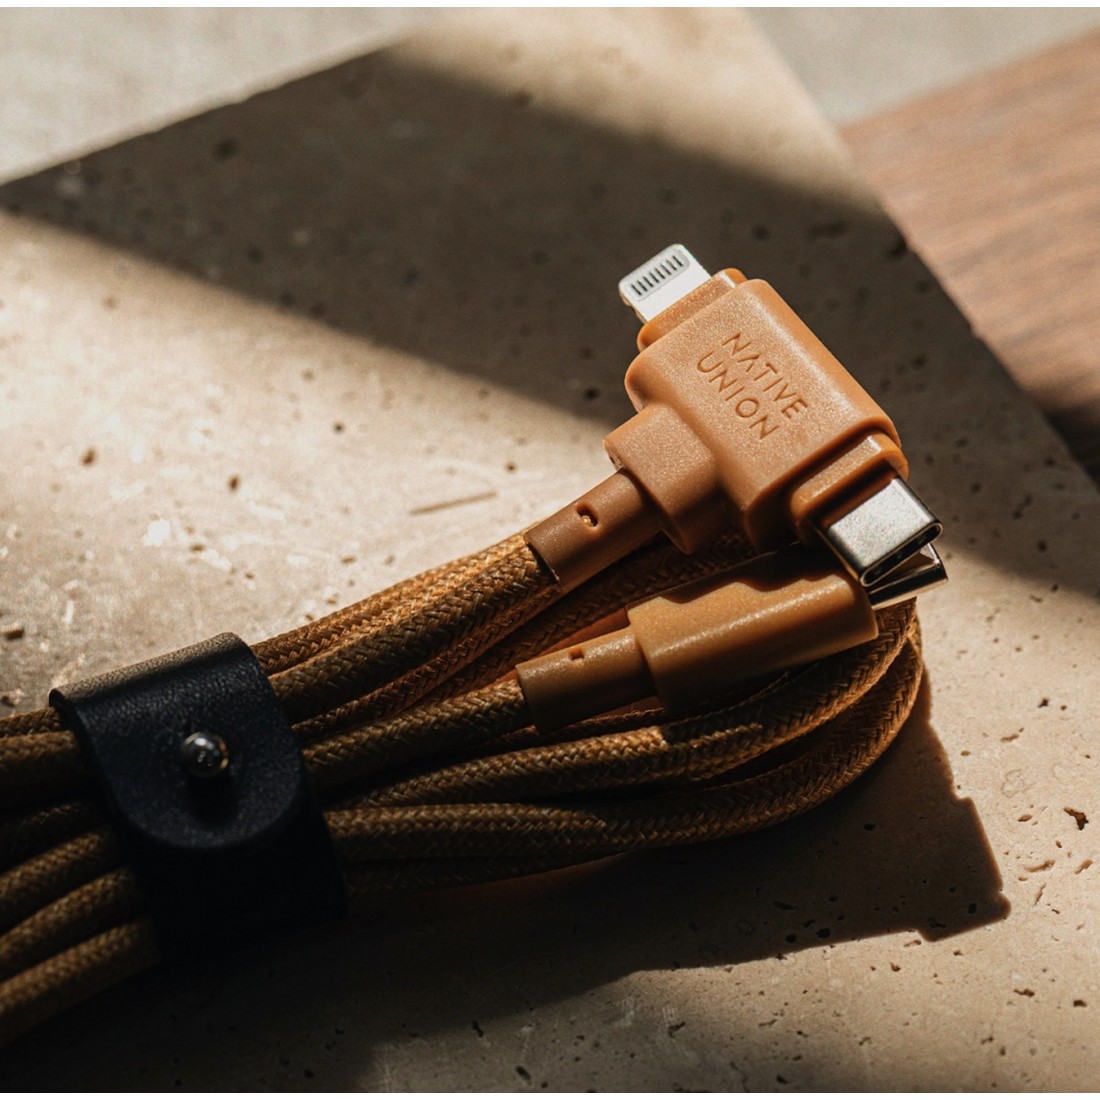 Кабель USB-C to USB-C/Lightning Native Union Belt Cable Universal Kraft (1.5 m) (BELT-CCL-KRF-NP)